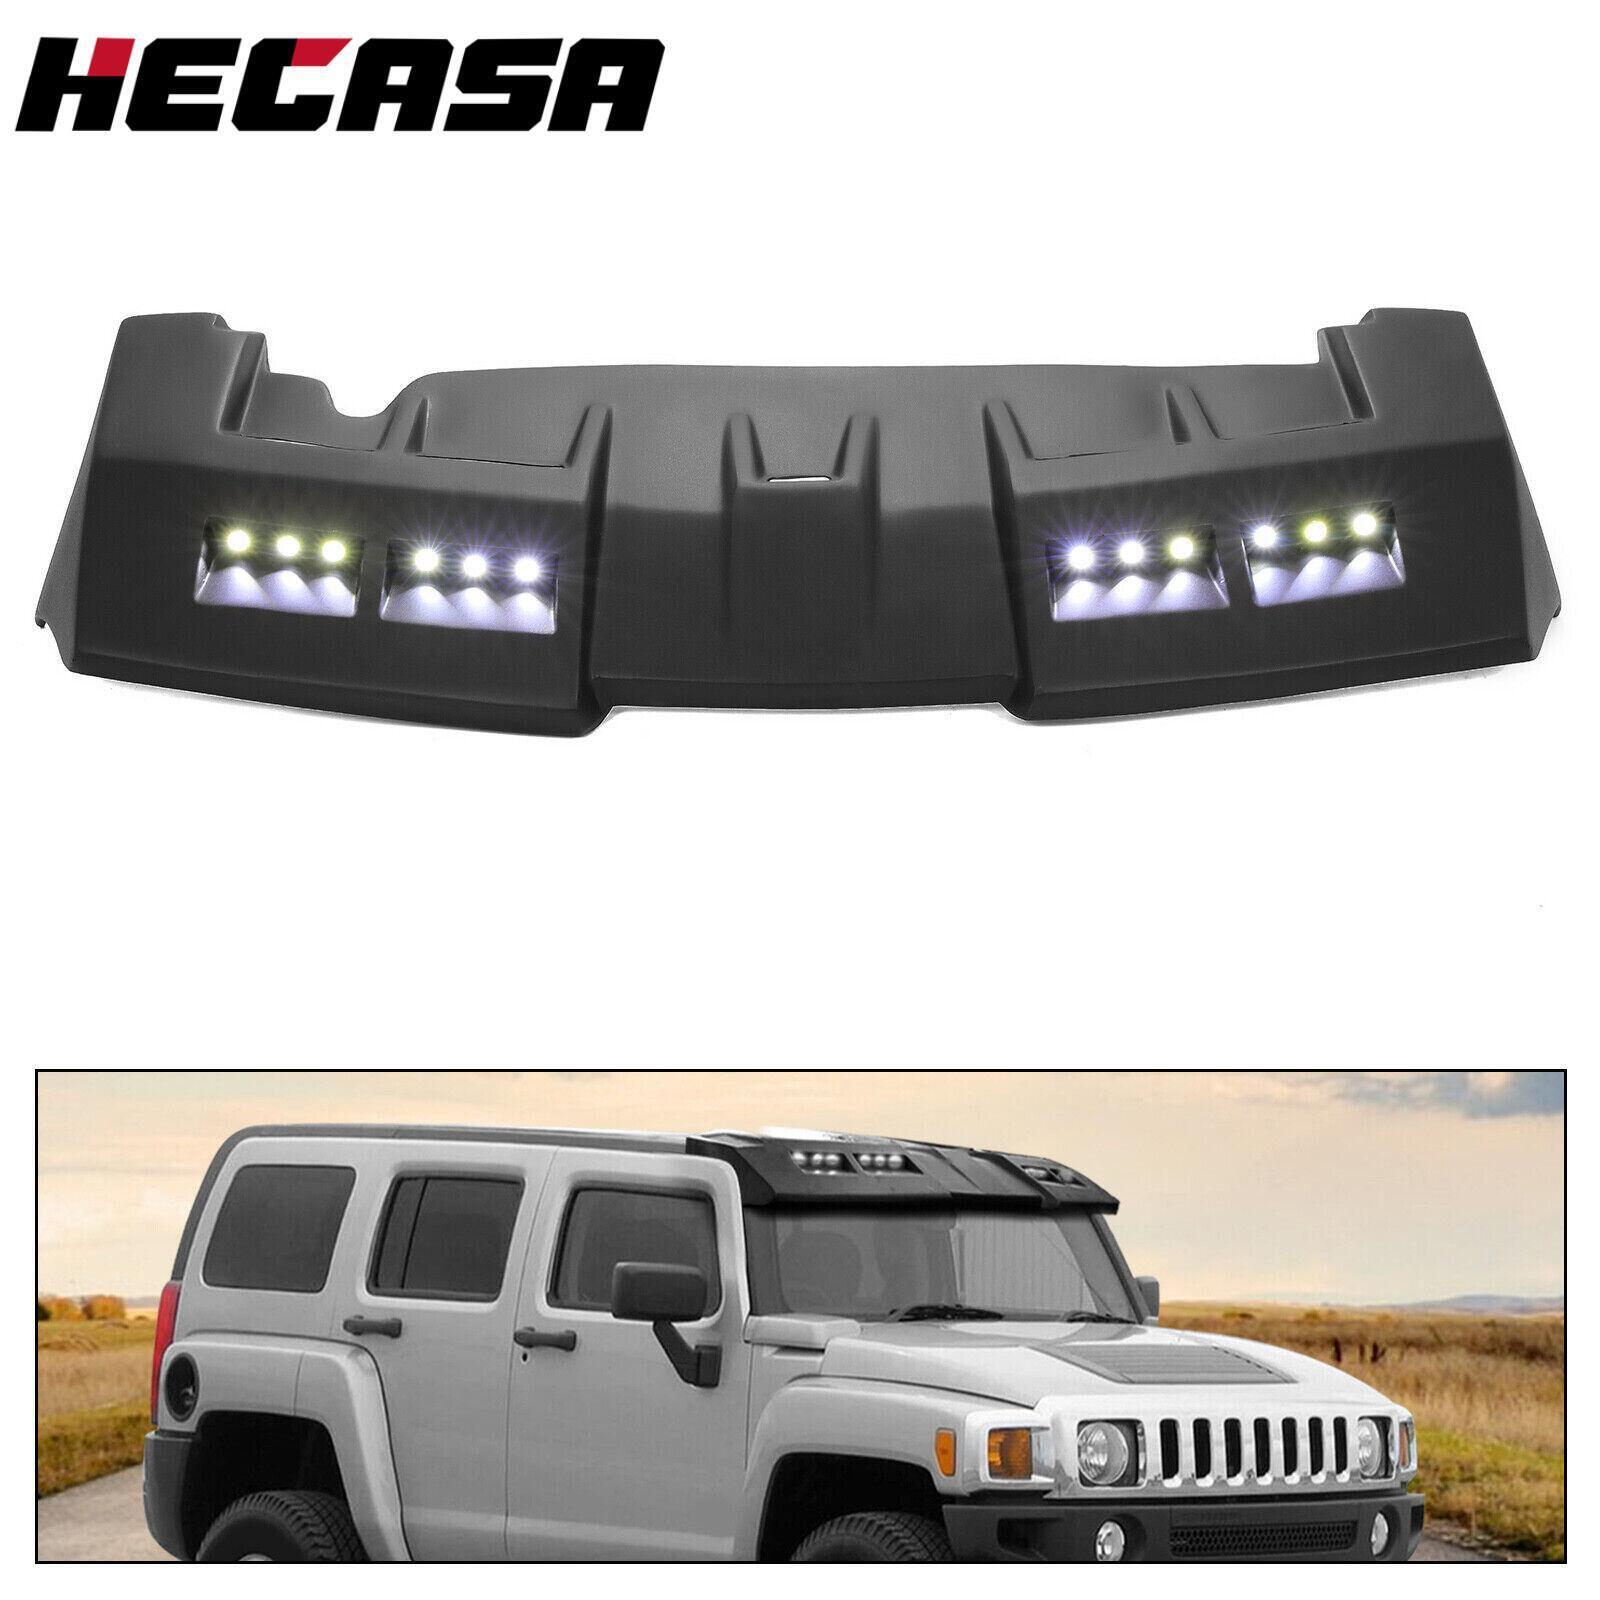 HECASA Sun Visor Roof For Hummer H3 Fiberglass Black w/ LED DRL Lights 1-Piece